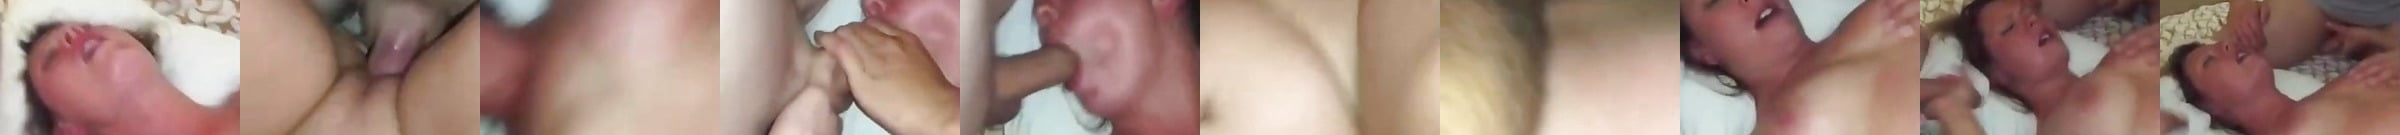 My Jewish Whore Wife Amanda Free Wife Tube Porn Video 91 Fr